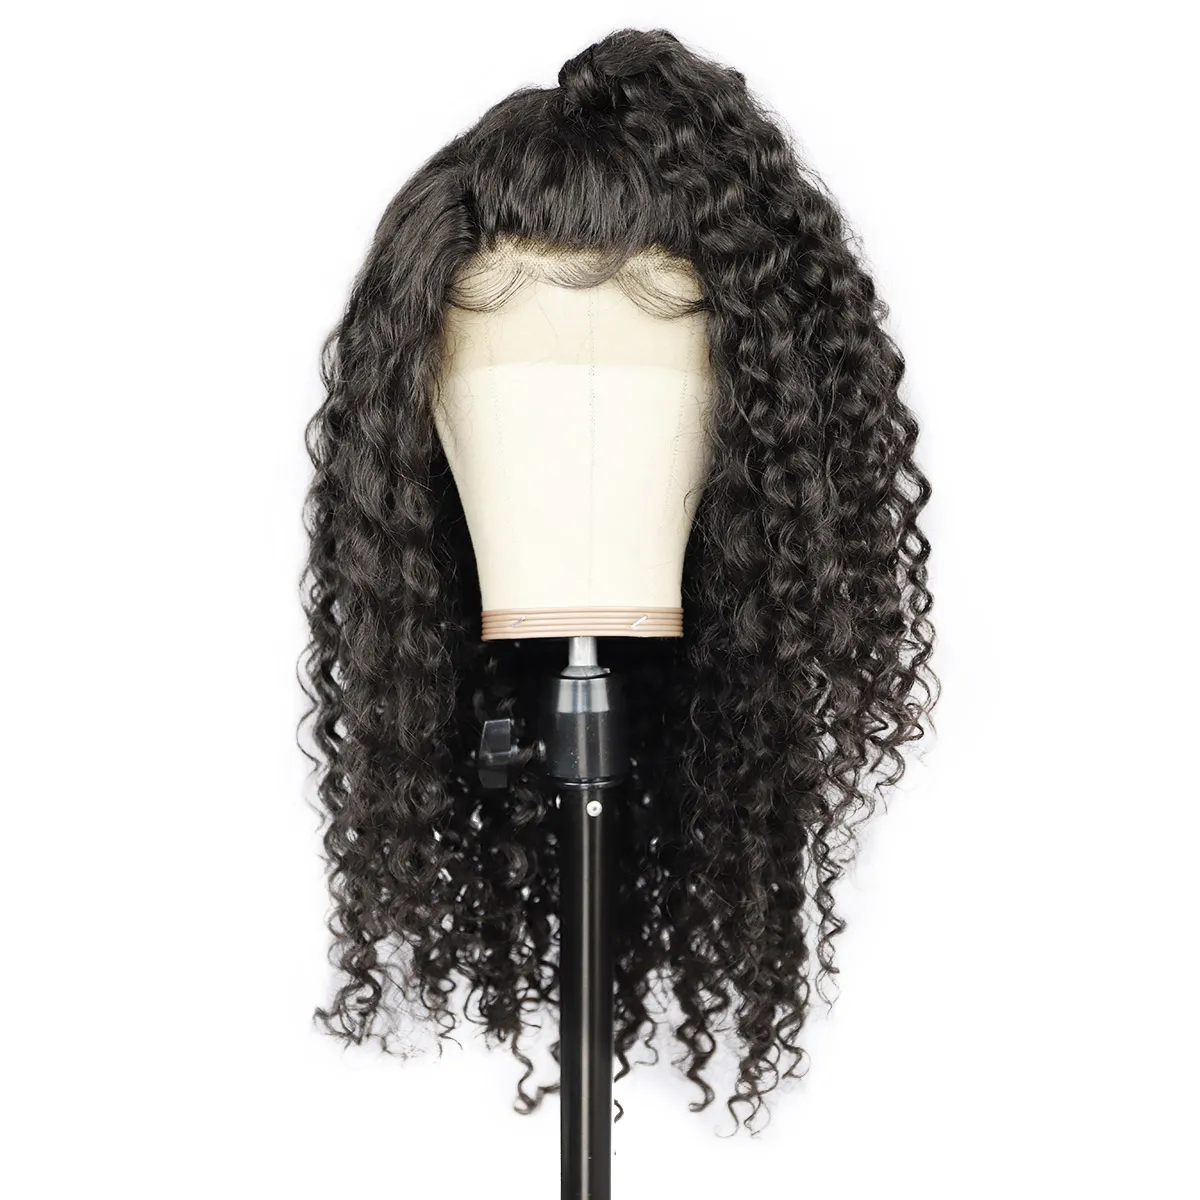 İnsan saçı dantel ön peruklar Brezilya derin dalga 13 4 orta boy wig266a